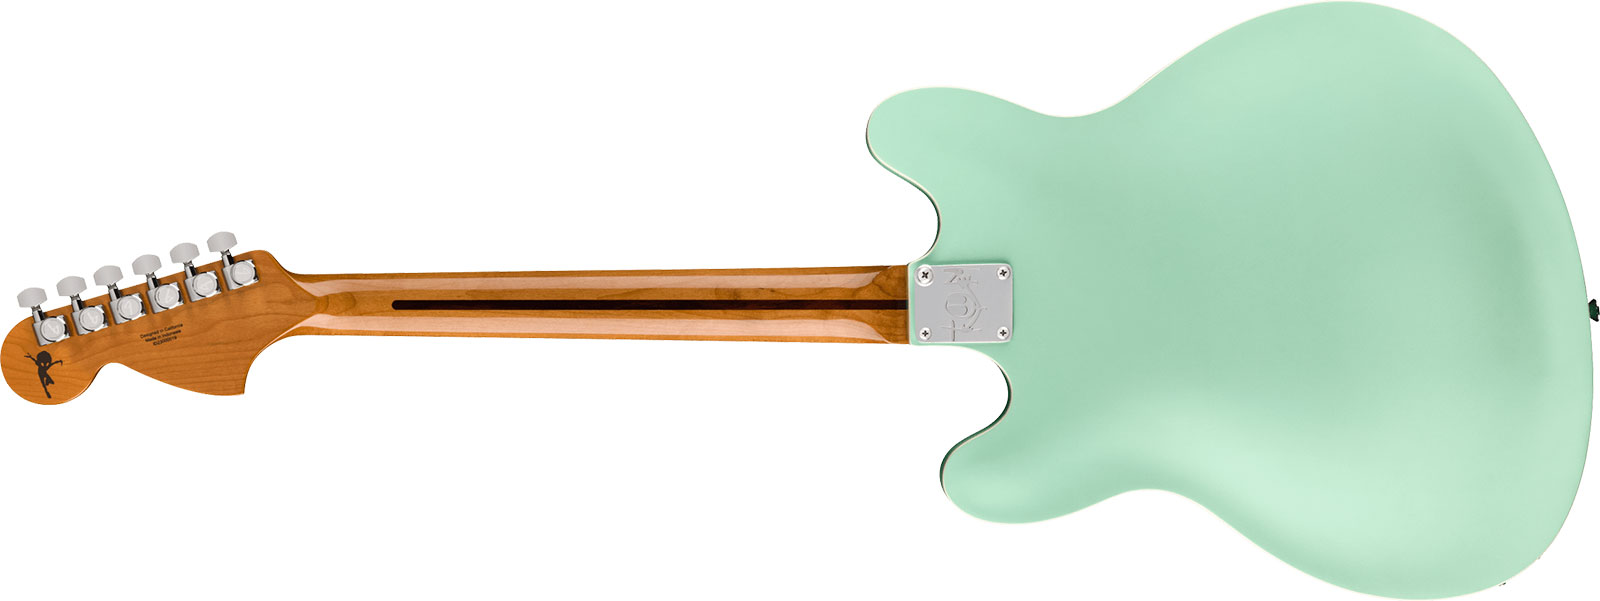 Fender Tom Delonge Starcaster 1h Seymour Duncan Ht Rw - Satin Surf Green - Semi-hollow electric guitar - Variation 1